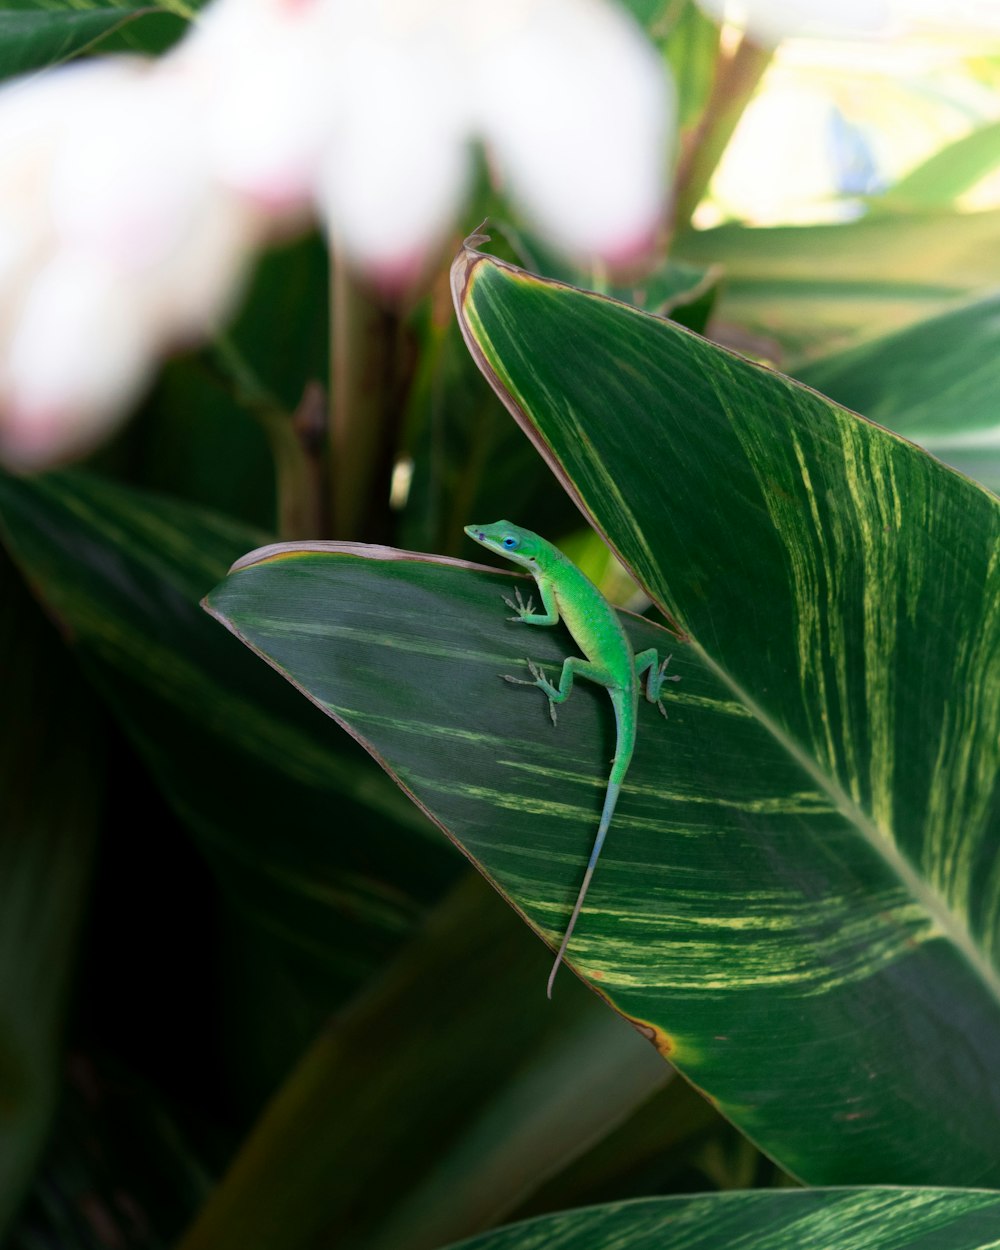 green lizard on green leaf